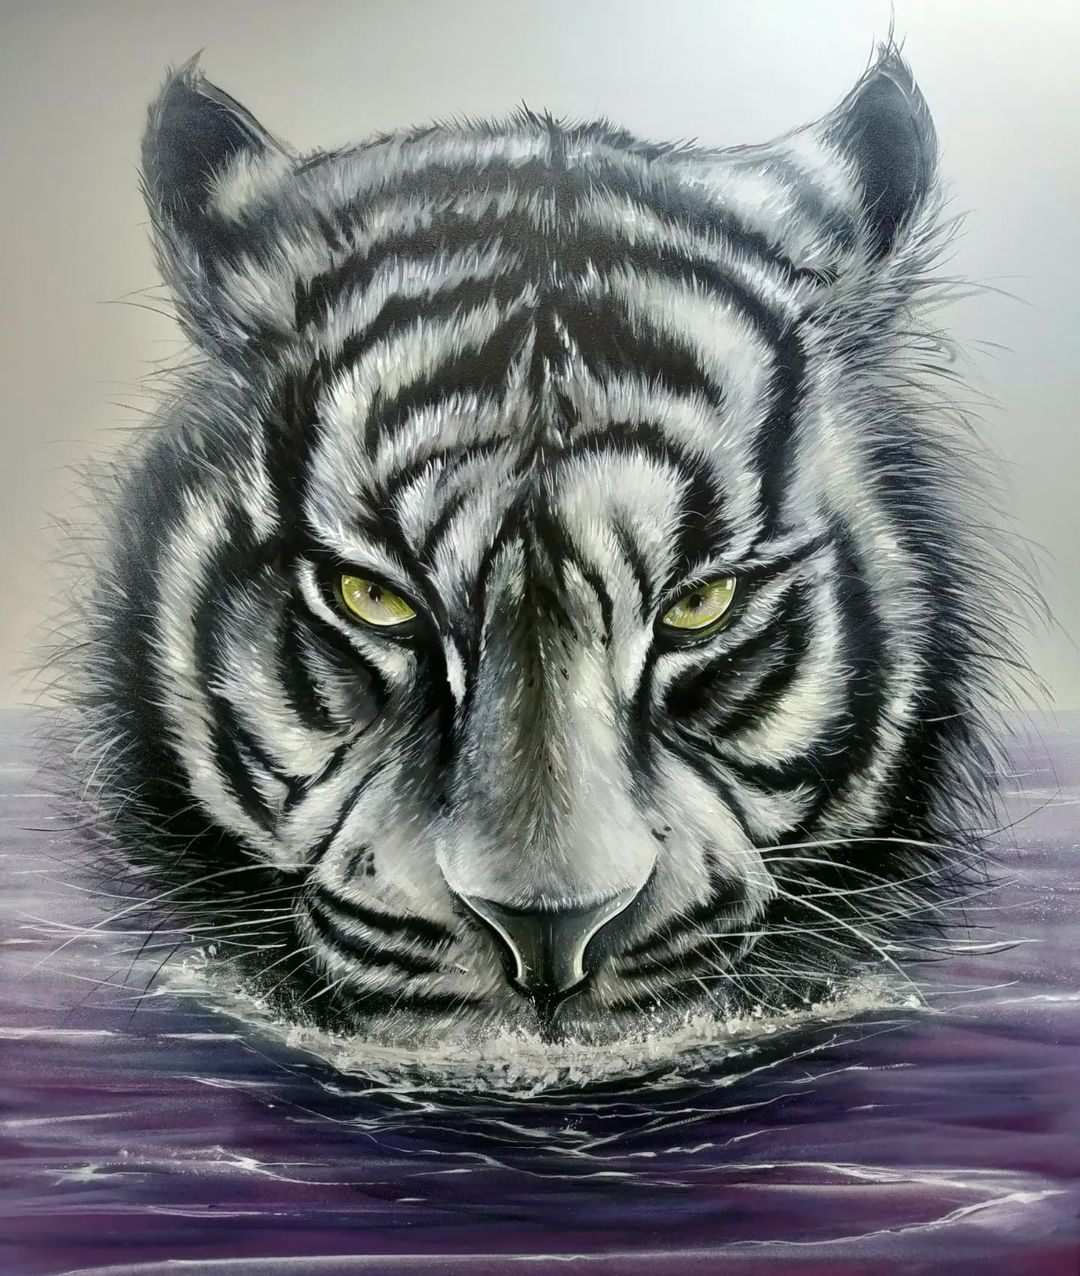 Tiger
cotton canvas
210-135